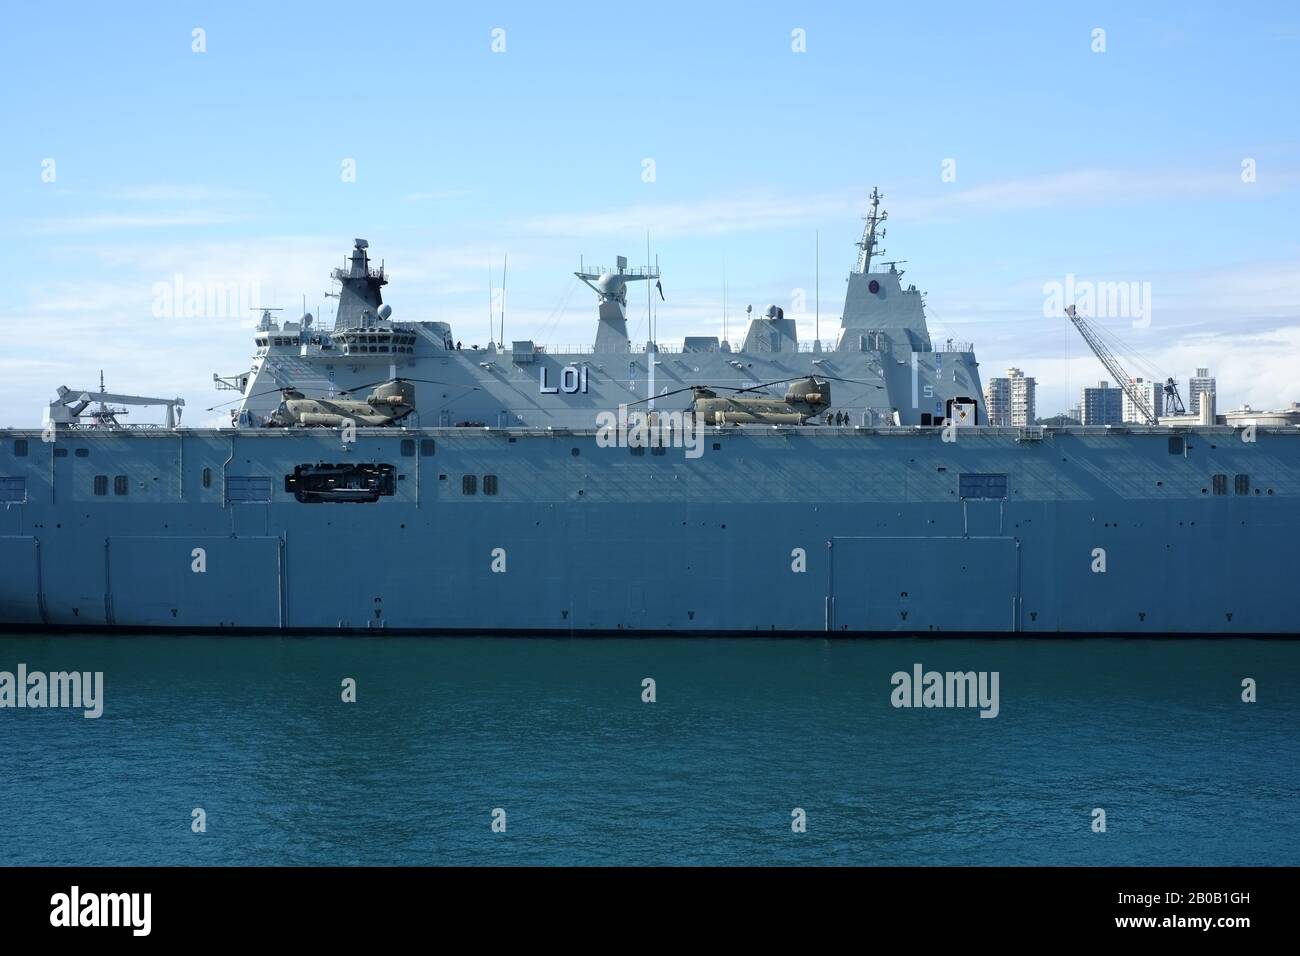 HMAS Adelaide (L01) berthed at Cowper Wharf, HMAS Kuttabul, Woolloomooloo, Australia Stock Photo